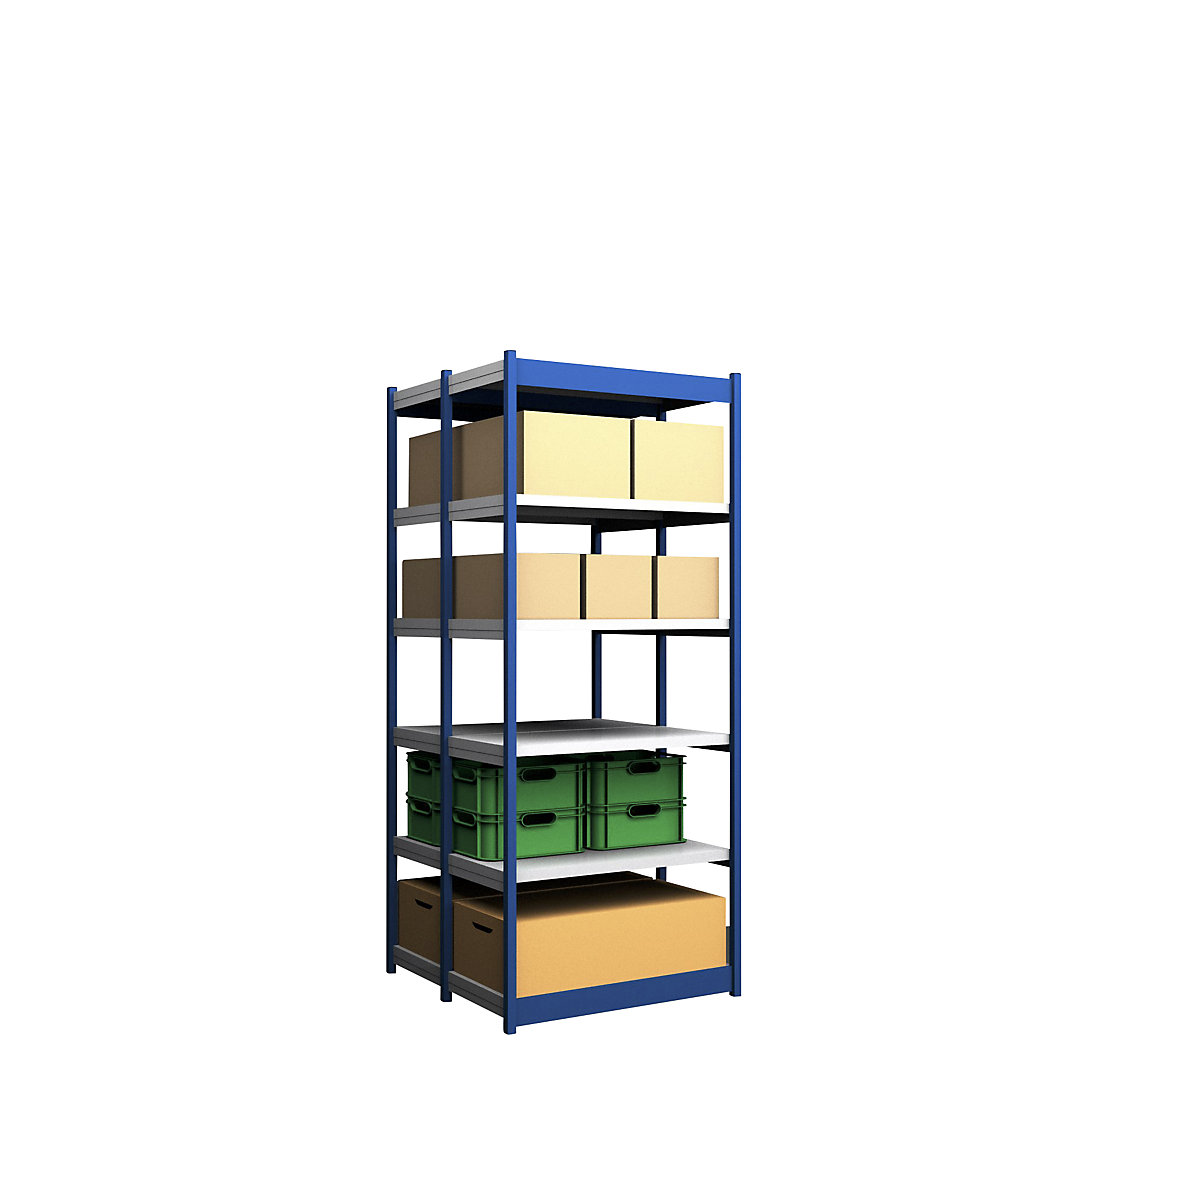 Stable boltless shelf unit, double sided – hofe, shelf unit height 2500 mm, blue / zinc-plated, shelf width 1025 mm, basic shelf unit, width x depth 1025 x 500 mm-3